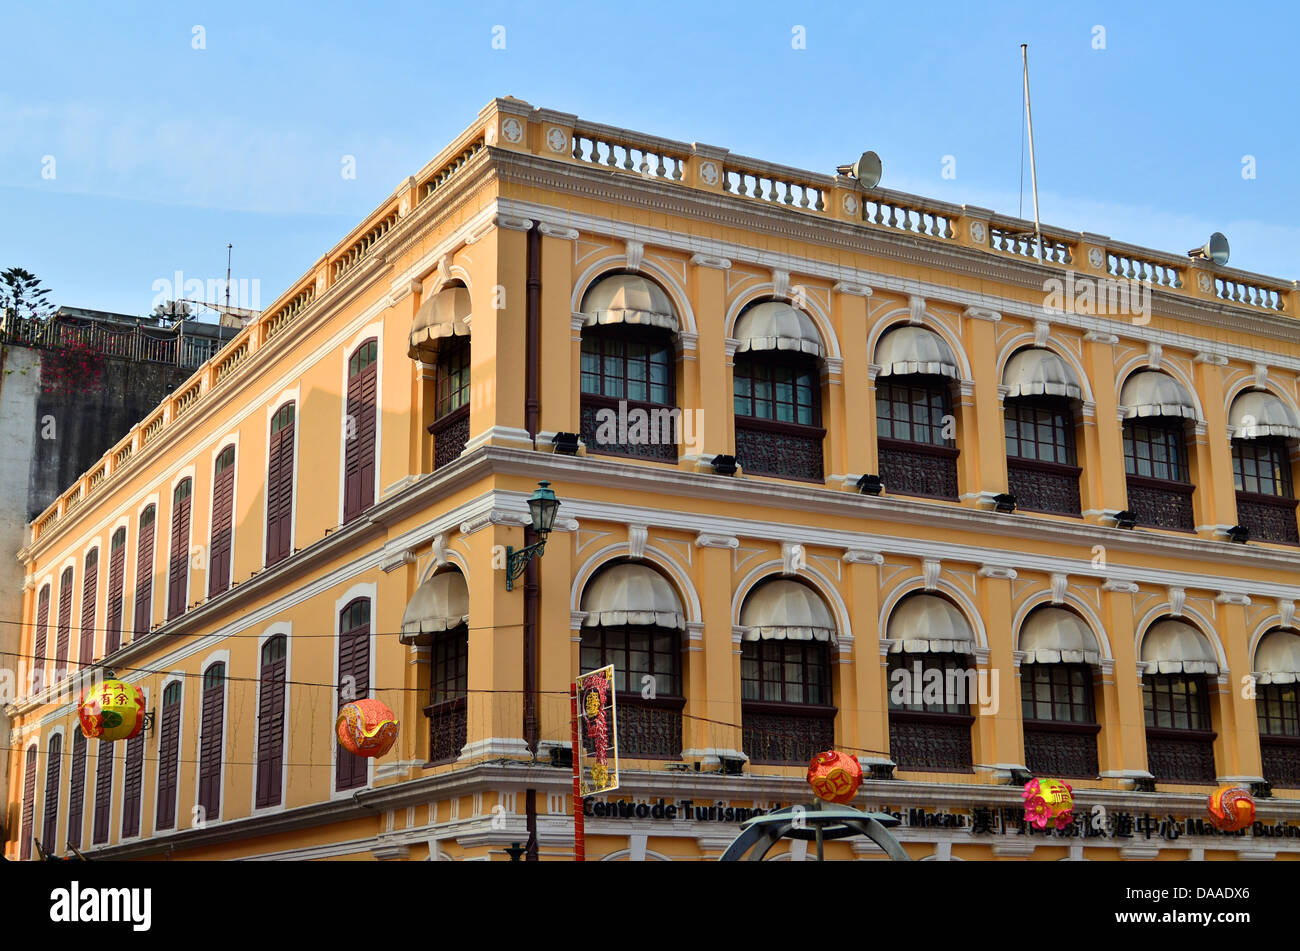 The Centro de Turismo de Negocios de Macau is housed in this neo-classical building at the Senado square, the centre of Macau. Stock Photo